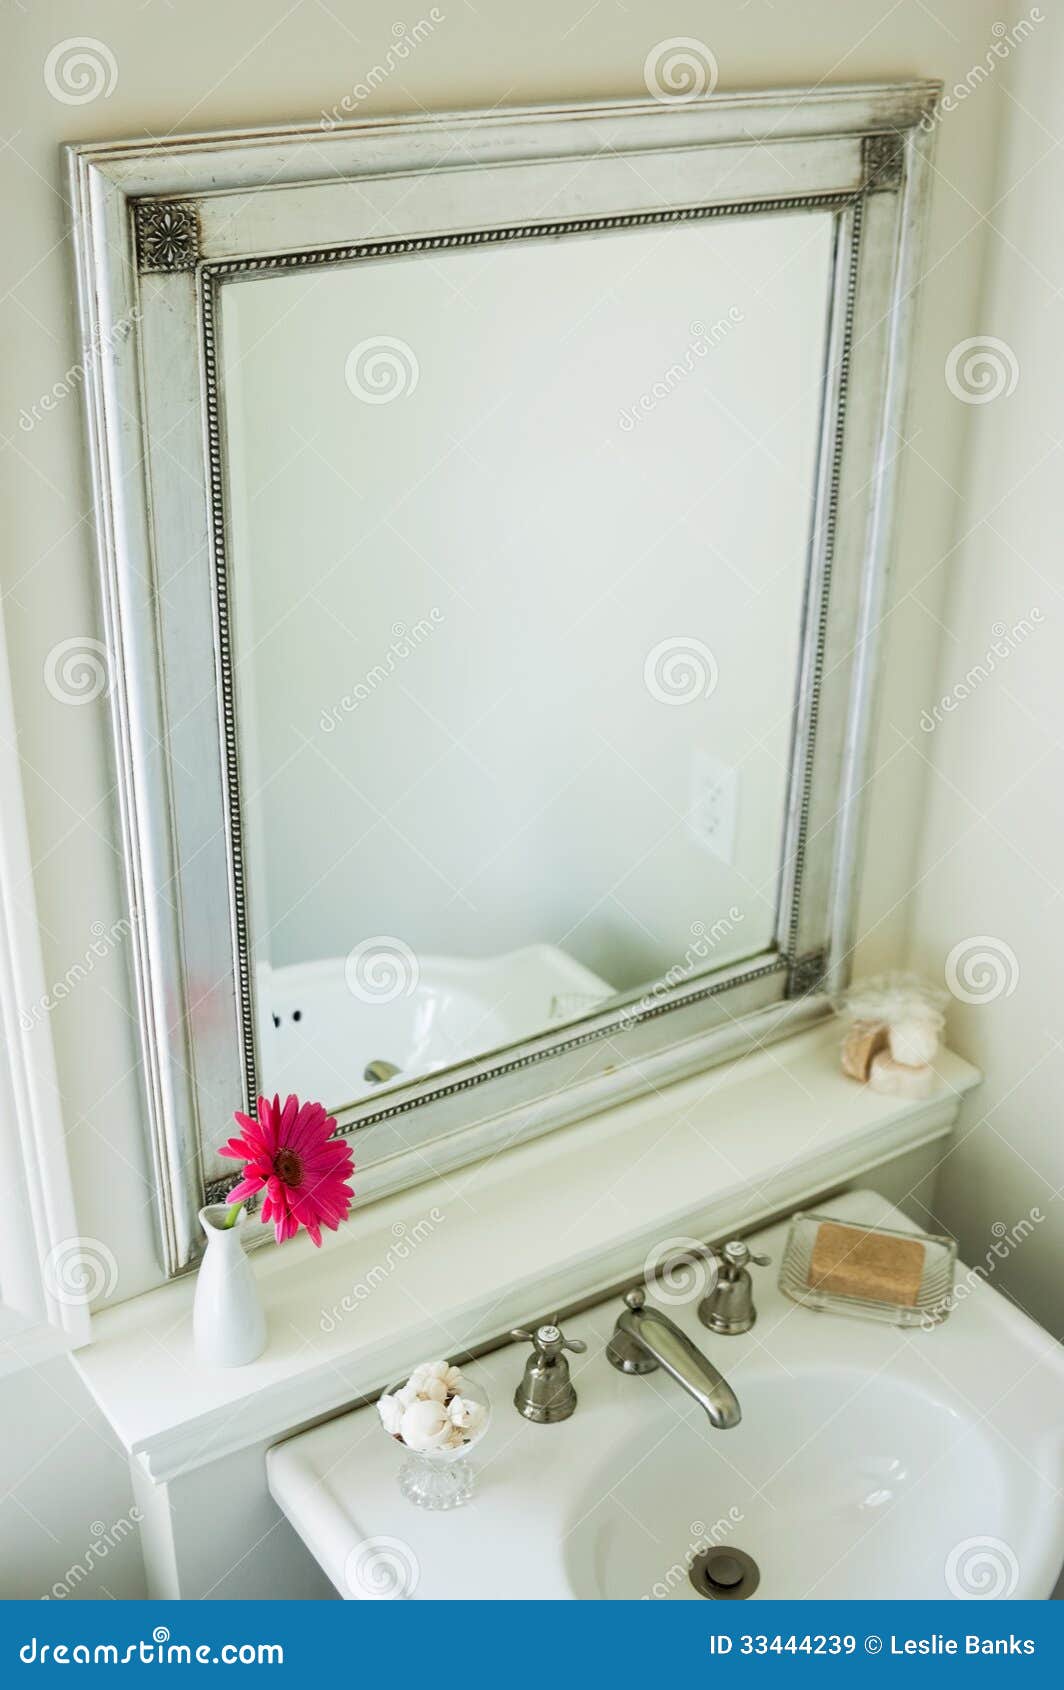 Bathroom Mirror Stock Image Image Of Design